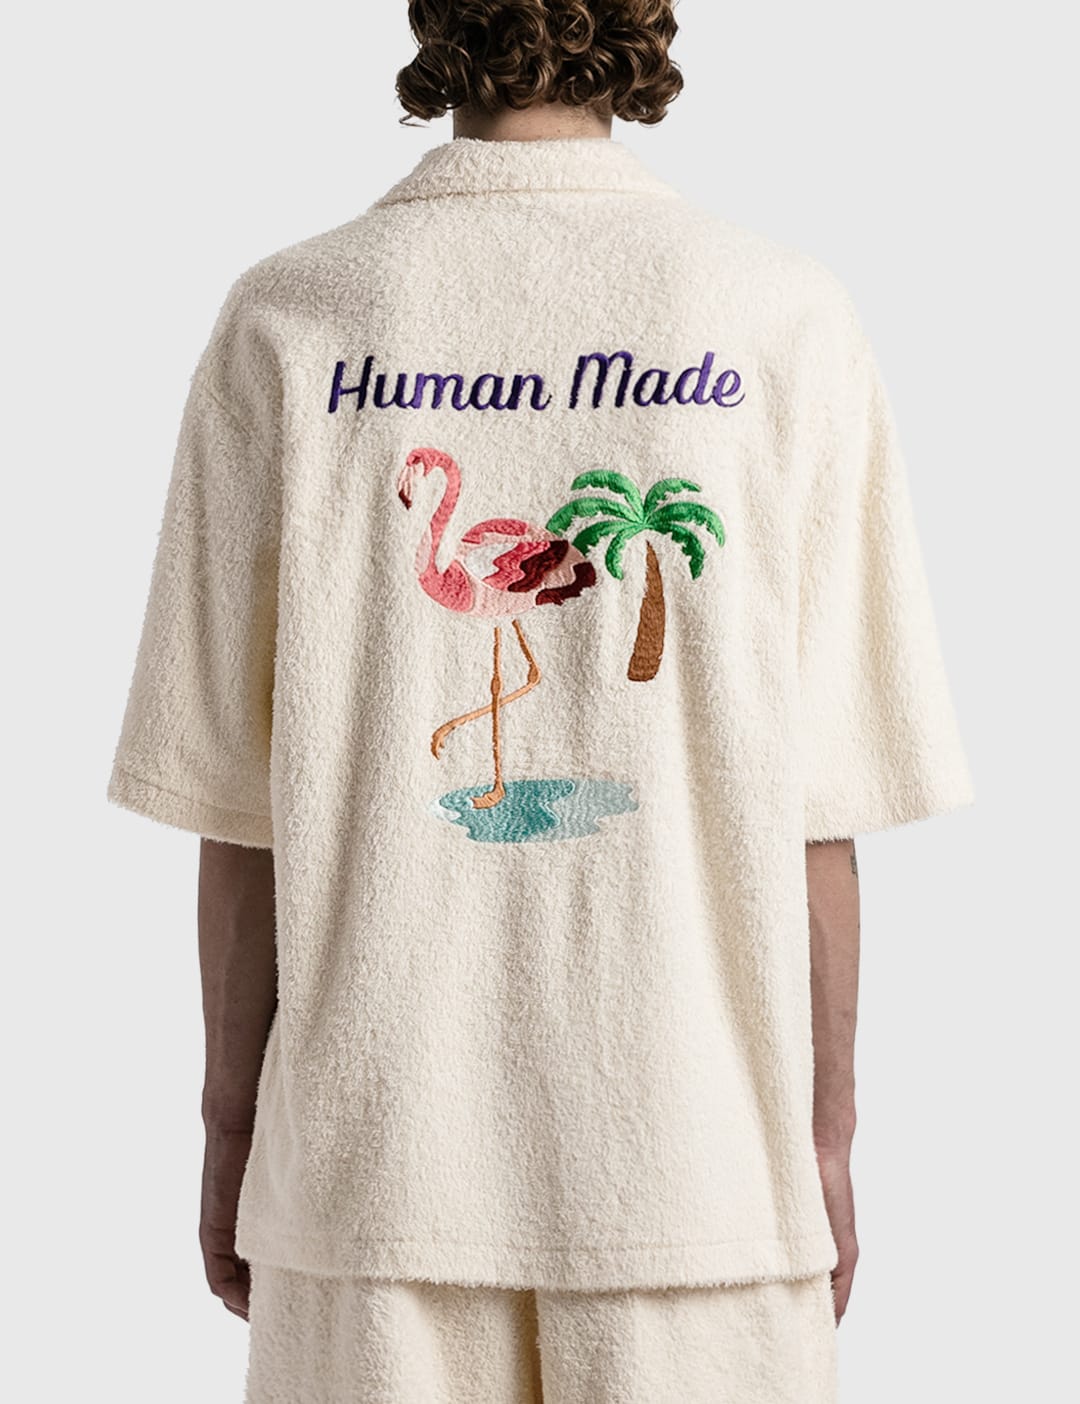 Human Made - Pile Shirt | HBX - HYPEBEAST 為您搜羅全球潮流時尚品牌